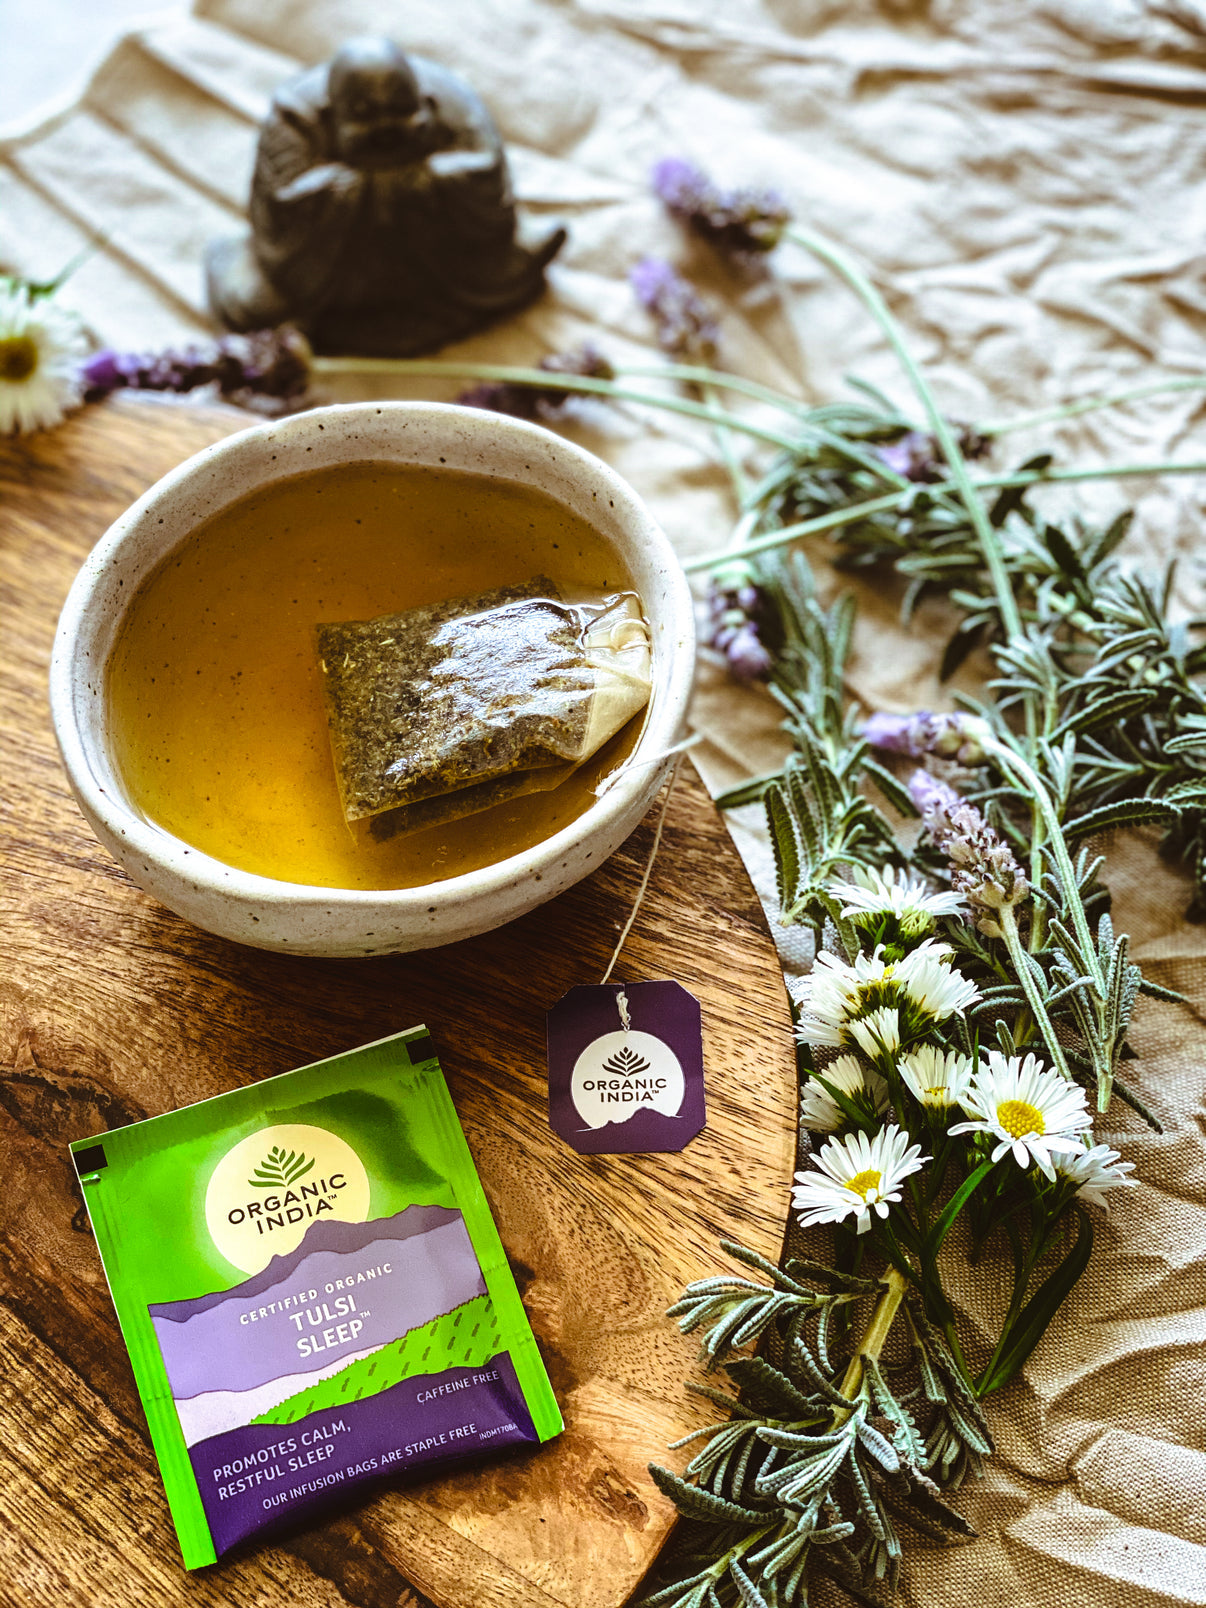 Organic India Wellness Tea Tulsi Sleep, 25 Herbal Tea Bags; Certified Organic